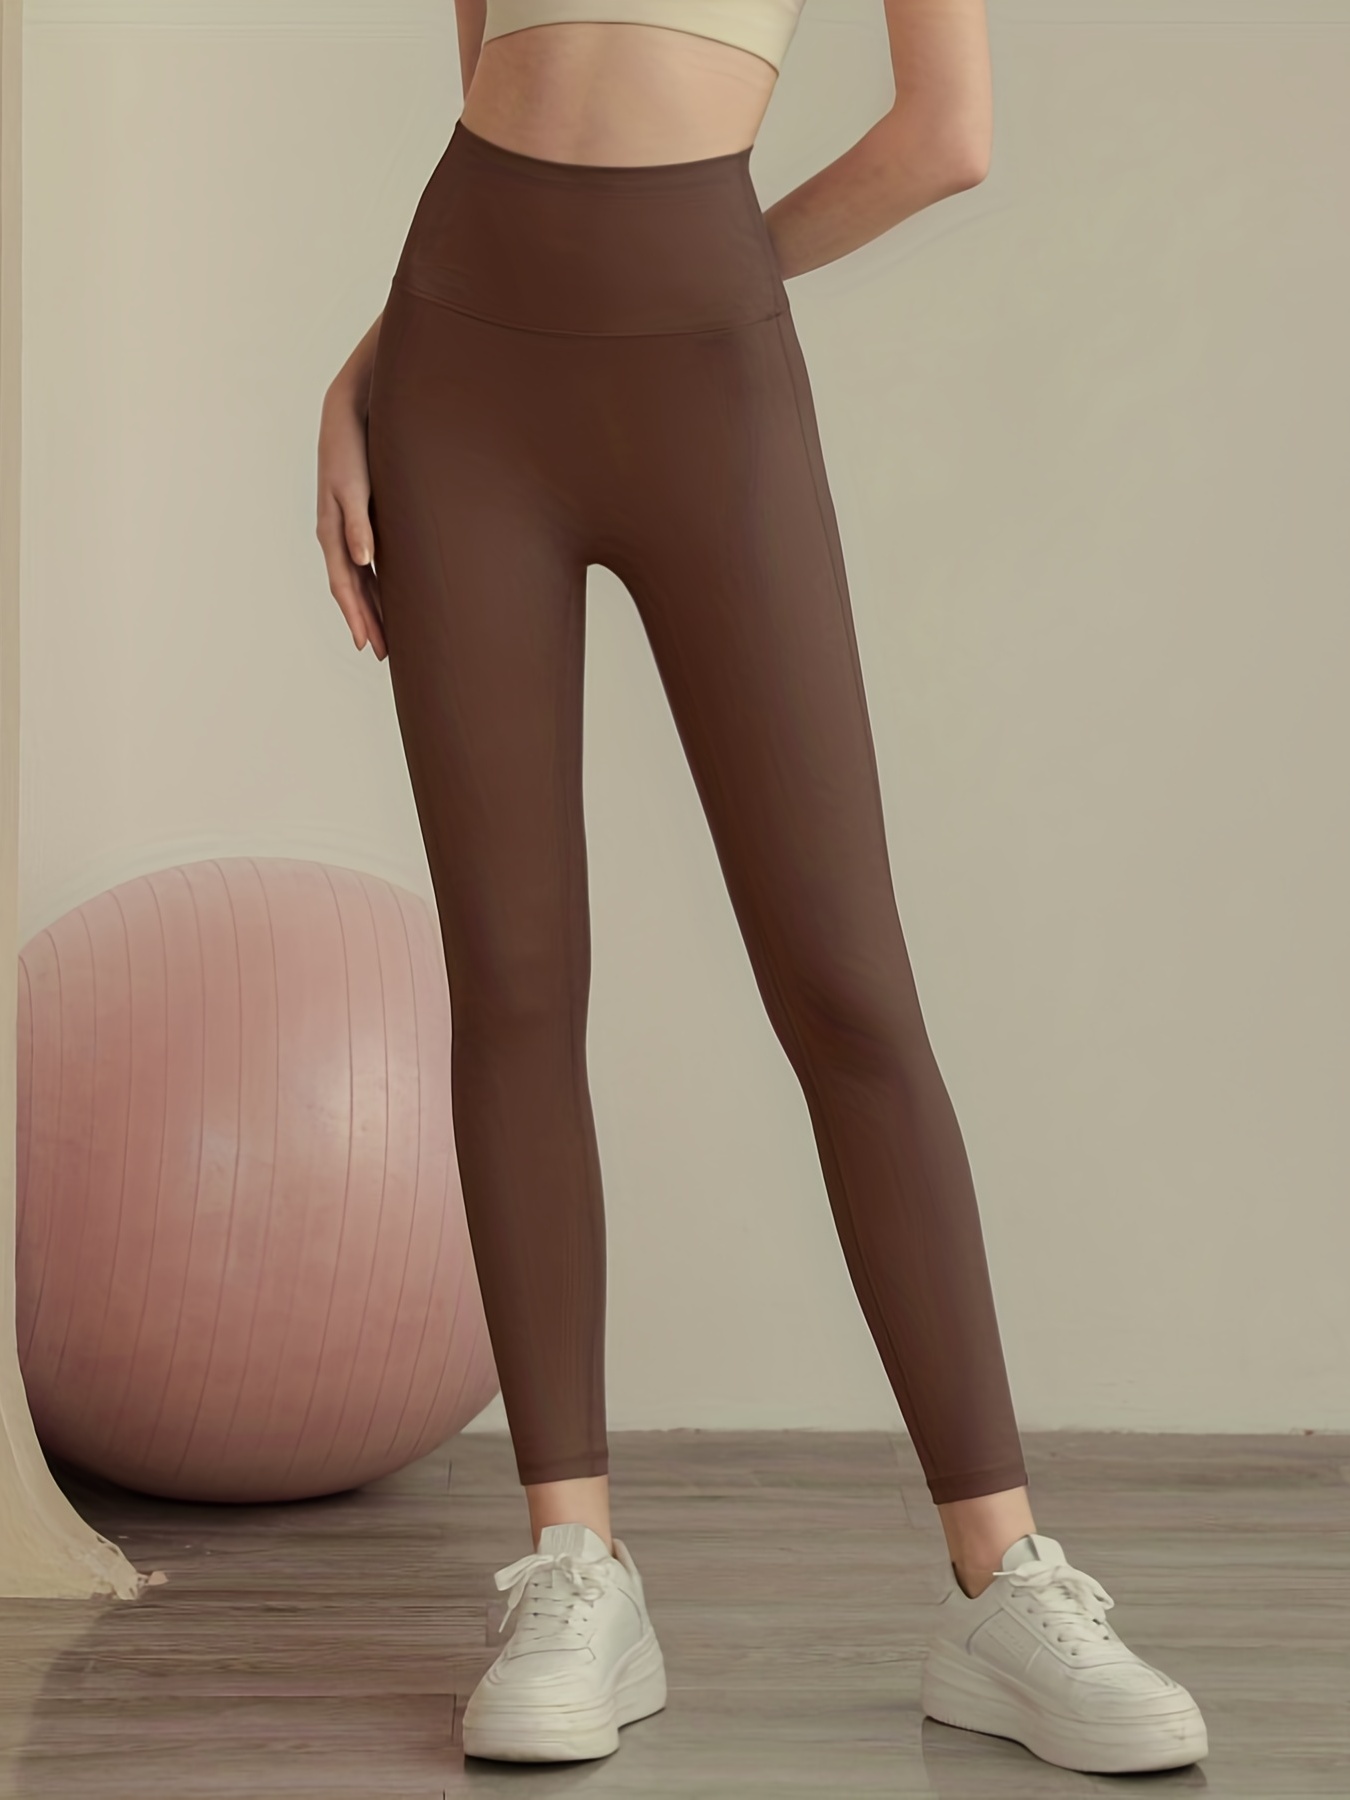 Yoga Pants Women Tight Fitting High Waist Butt Lift Quick Dry